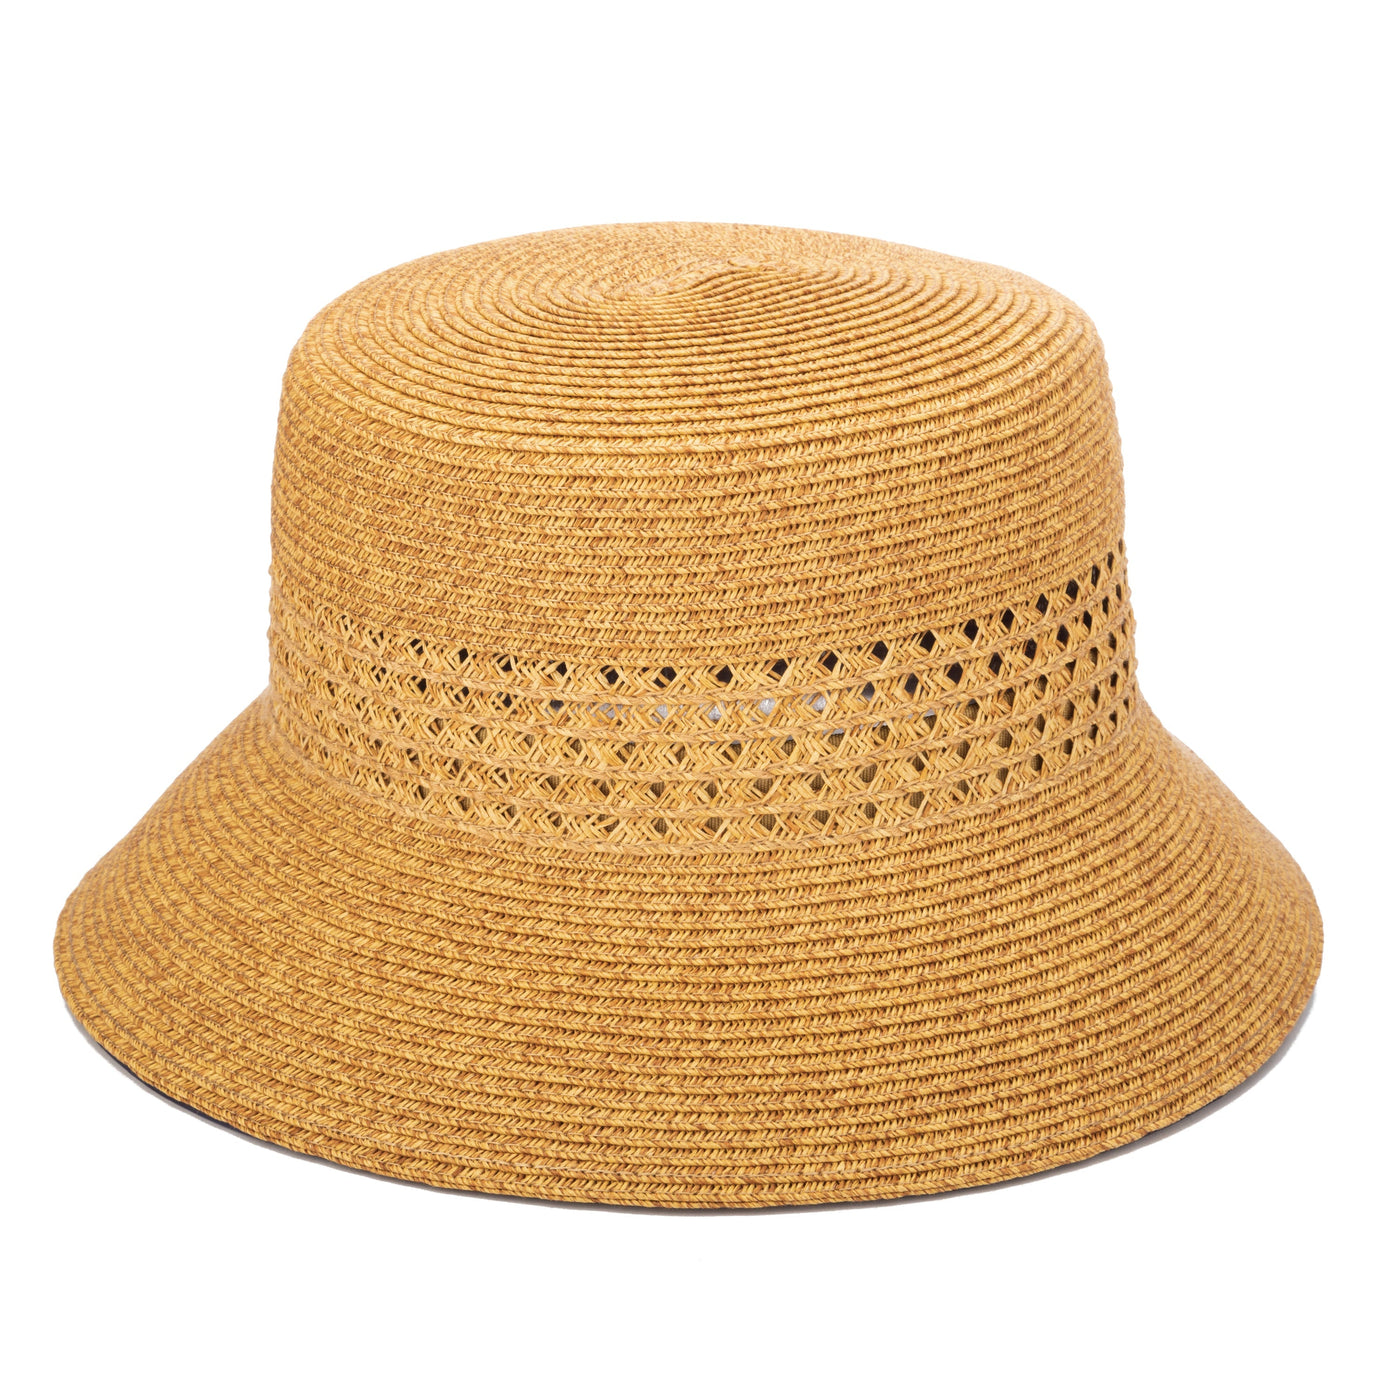 BUCKET - Everyday Full Sun Women's Bucket Hat - Ultrabraid & Crown Ventilation